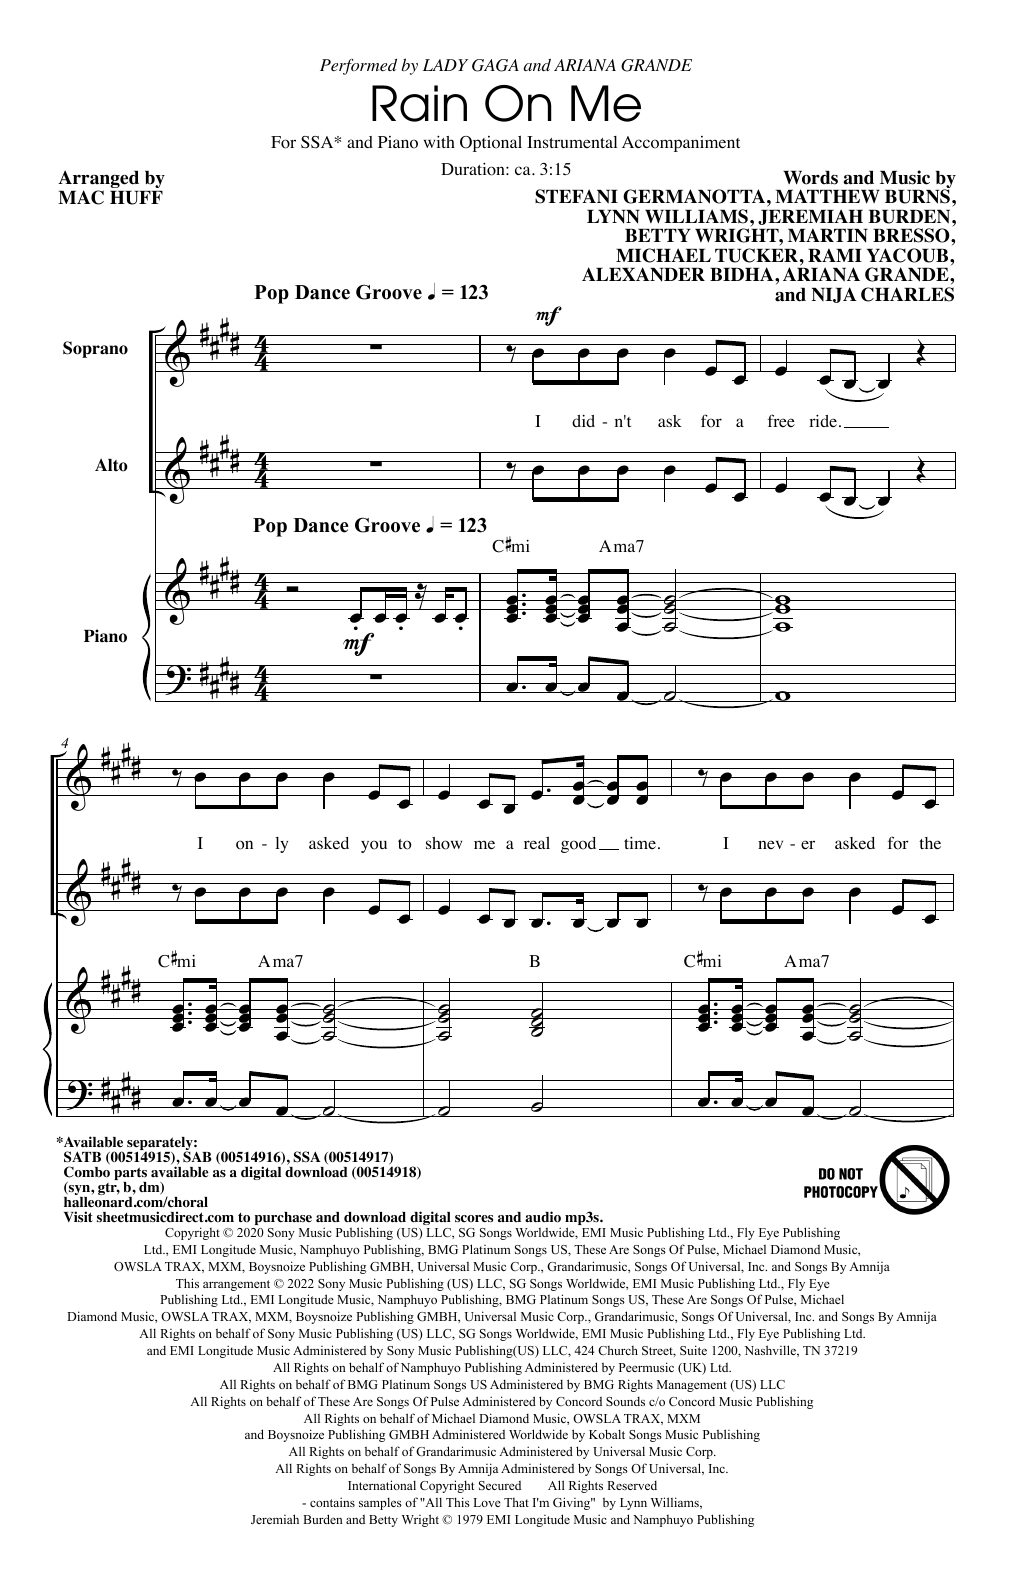 Lady Gaga & Ariana Grande Rain On Me (arr. Mac Huff) Sheet Music Notes & Chords for SAB Choir - Download or Print PDF